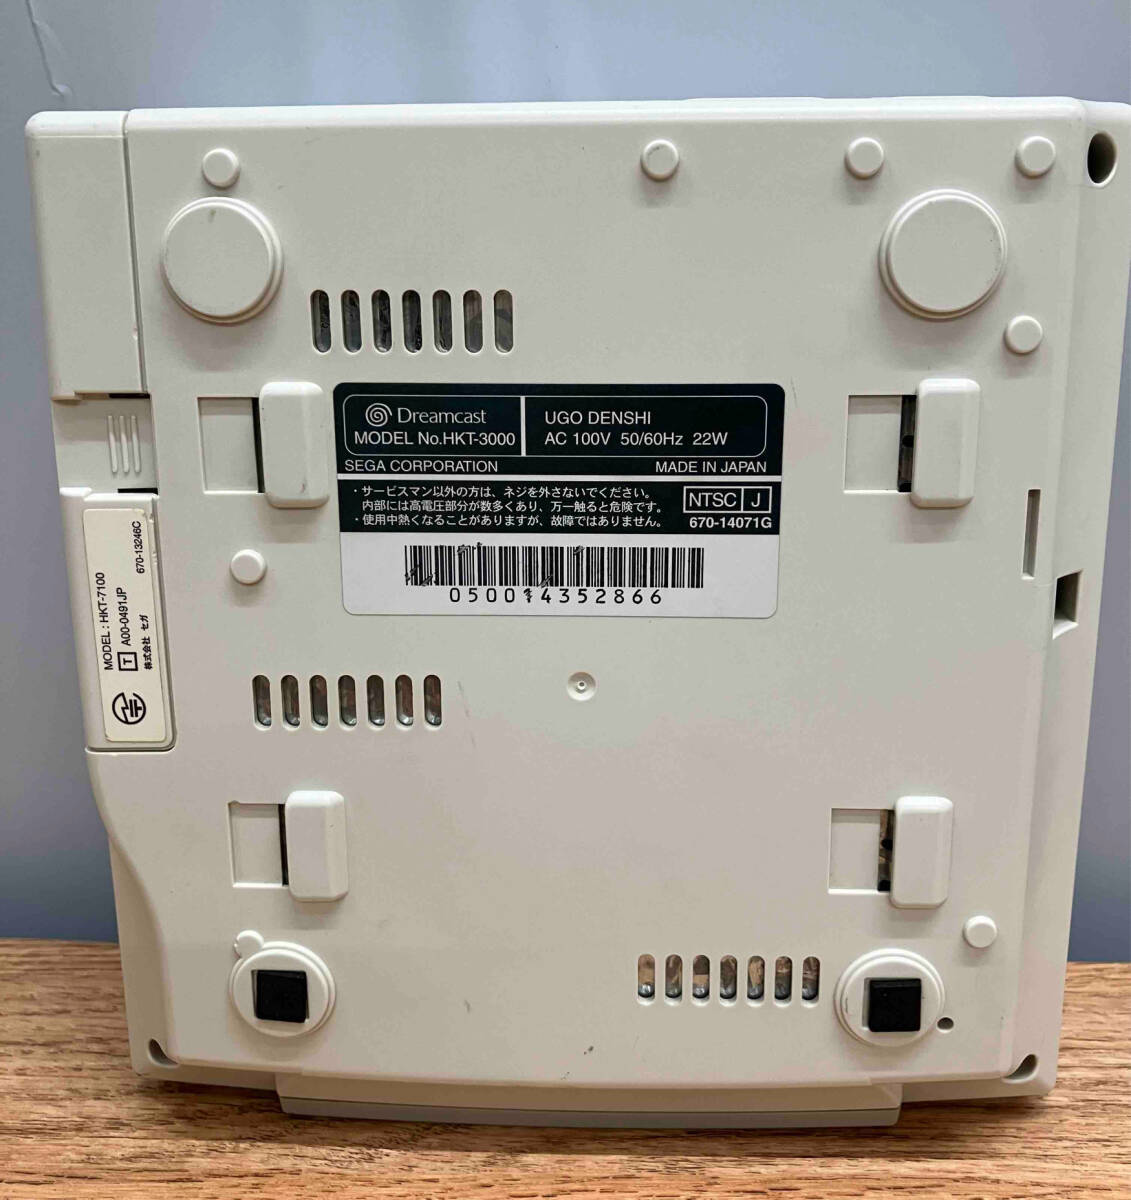  Junk * SEGA HKT-3000 Dreamcast Dreamcast body controller ×2 memory card ×3 power supply,AV cable 